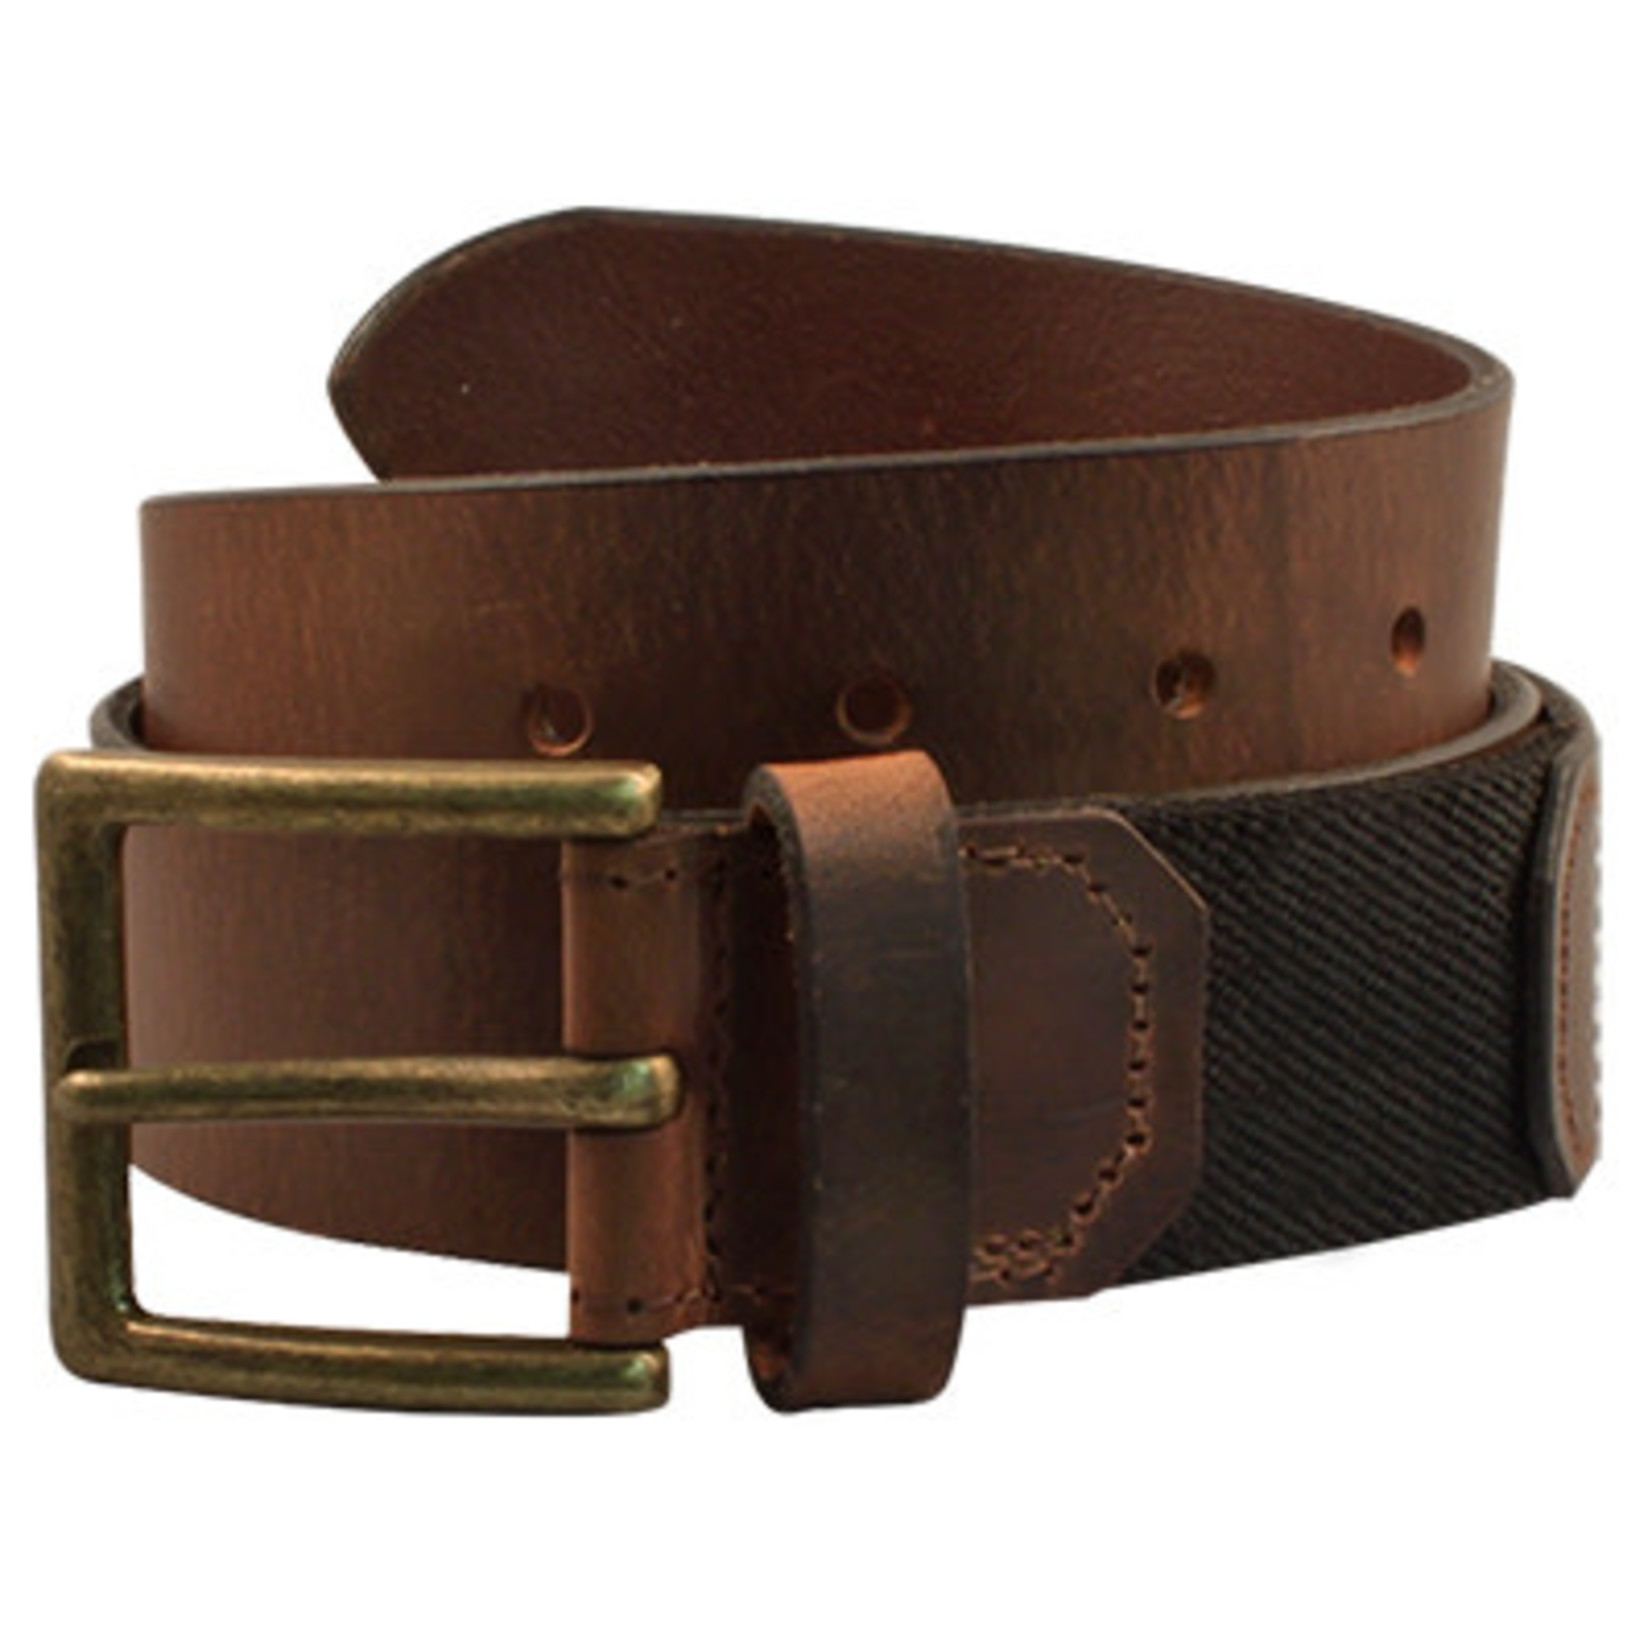 Bison Box Canyon Comfort Belt in Brown/Antique Bronze